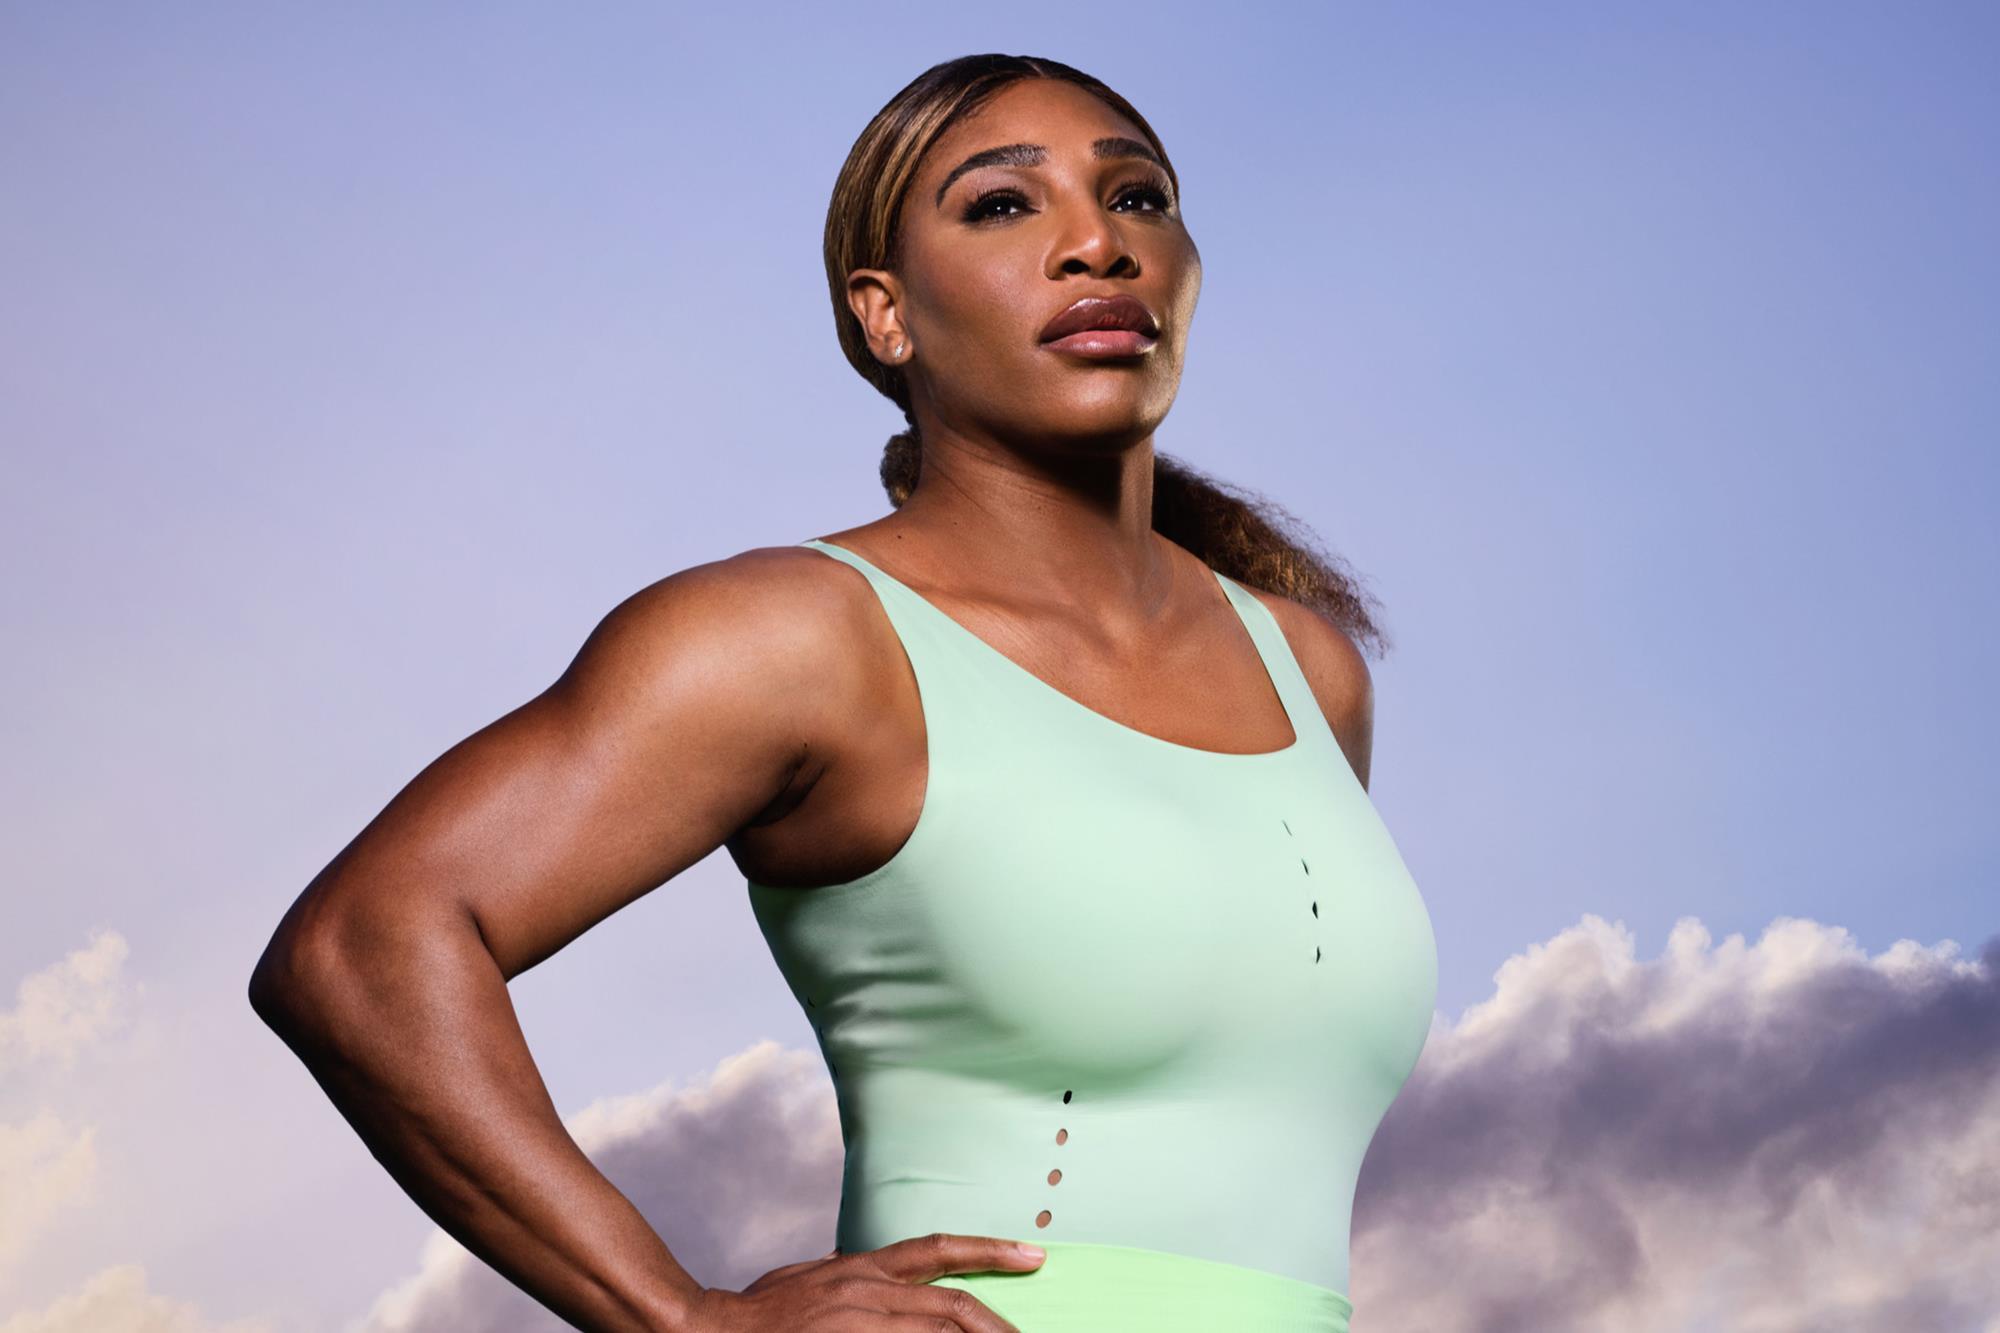 Serena Williams first athlete to receive Fashion Icon award, News briefs